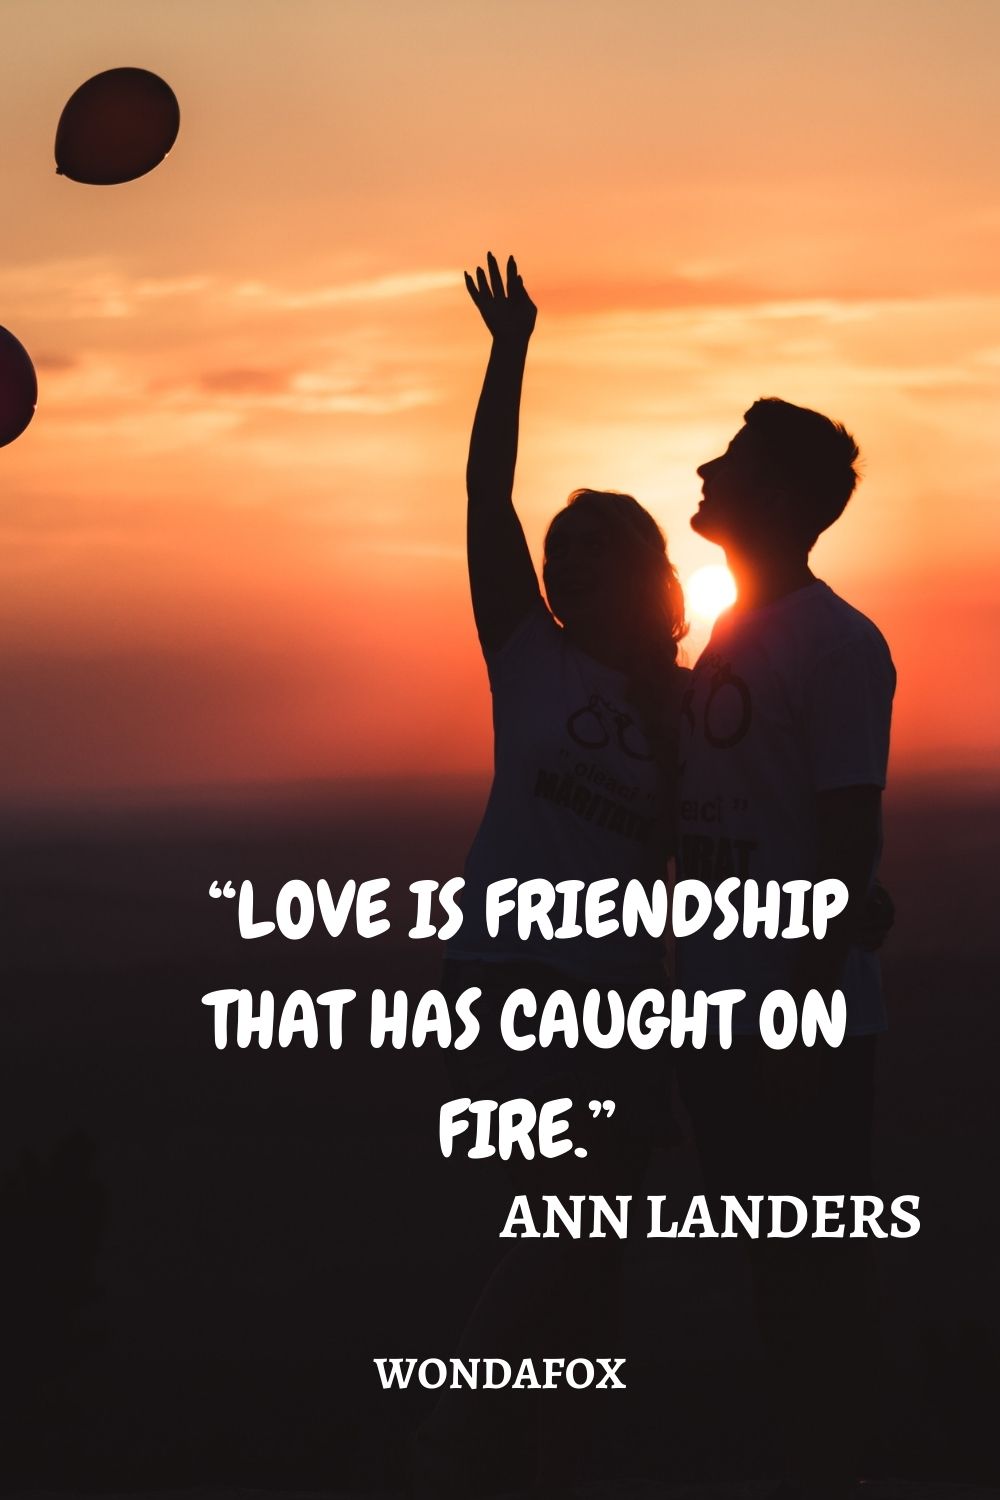 “Love is friendship that has caught on fire.”
Ann Landers